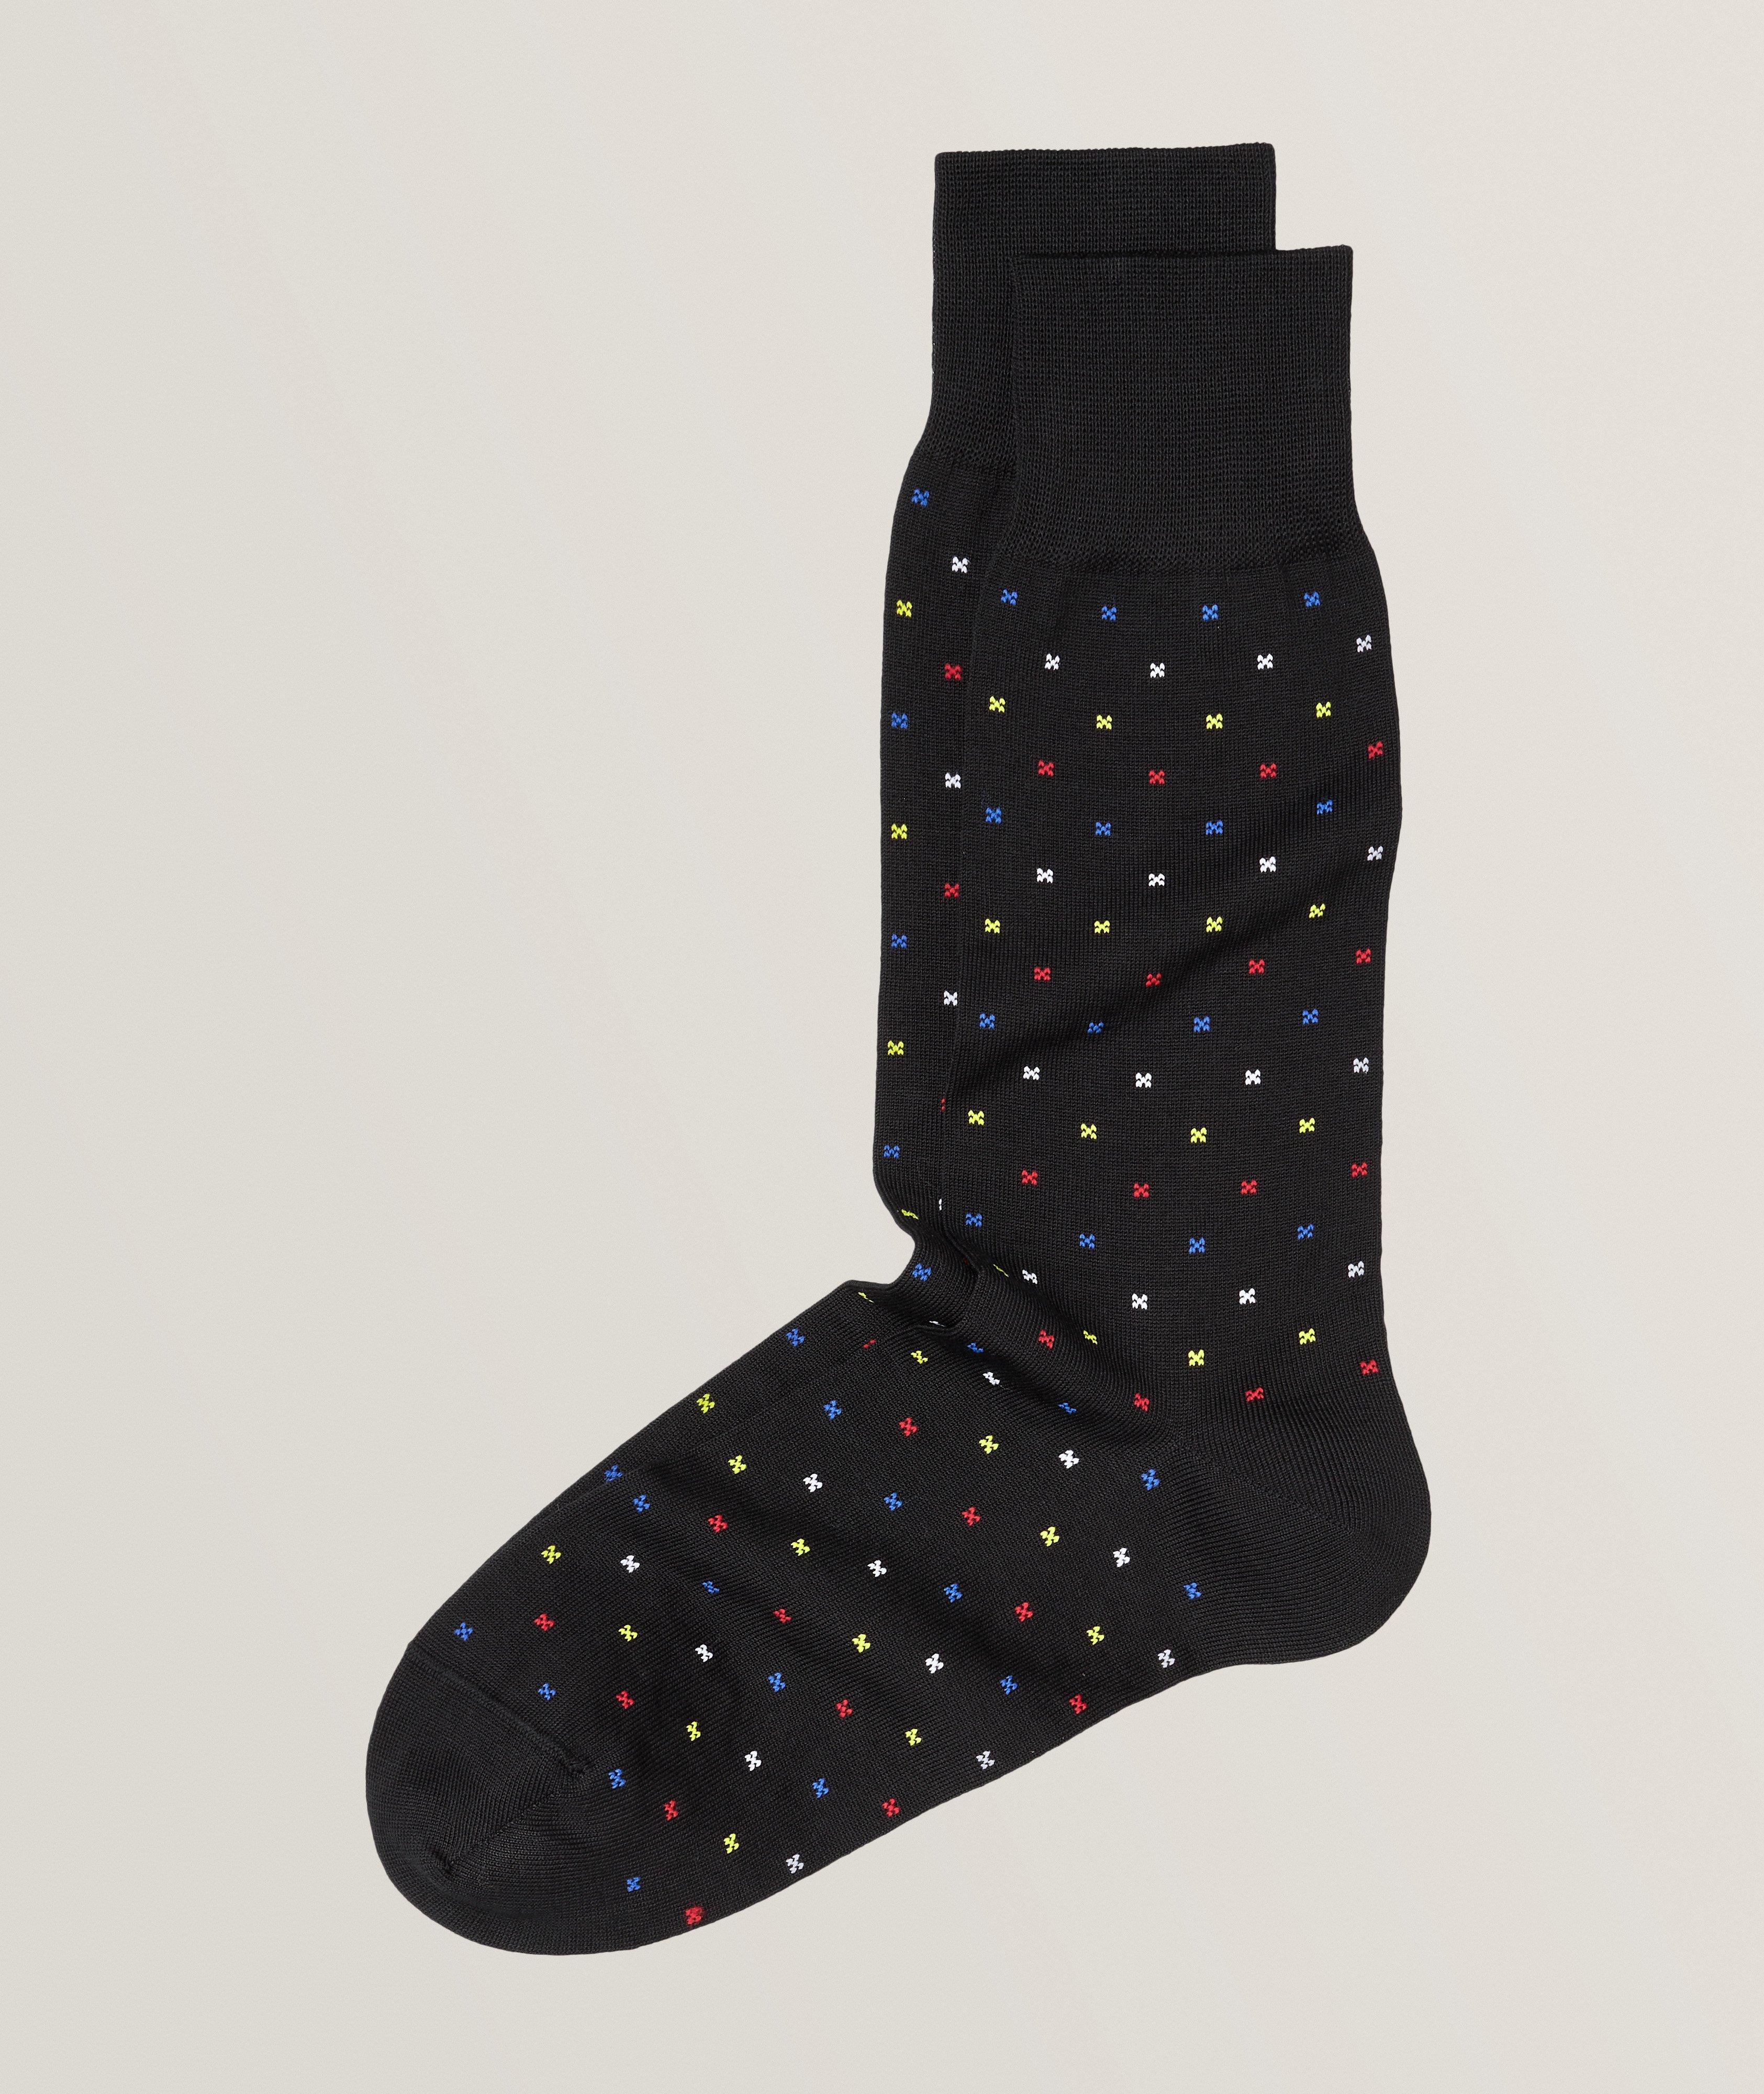 Dots Mercerised Cotton-Blend Dress Socks image 0